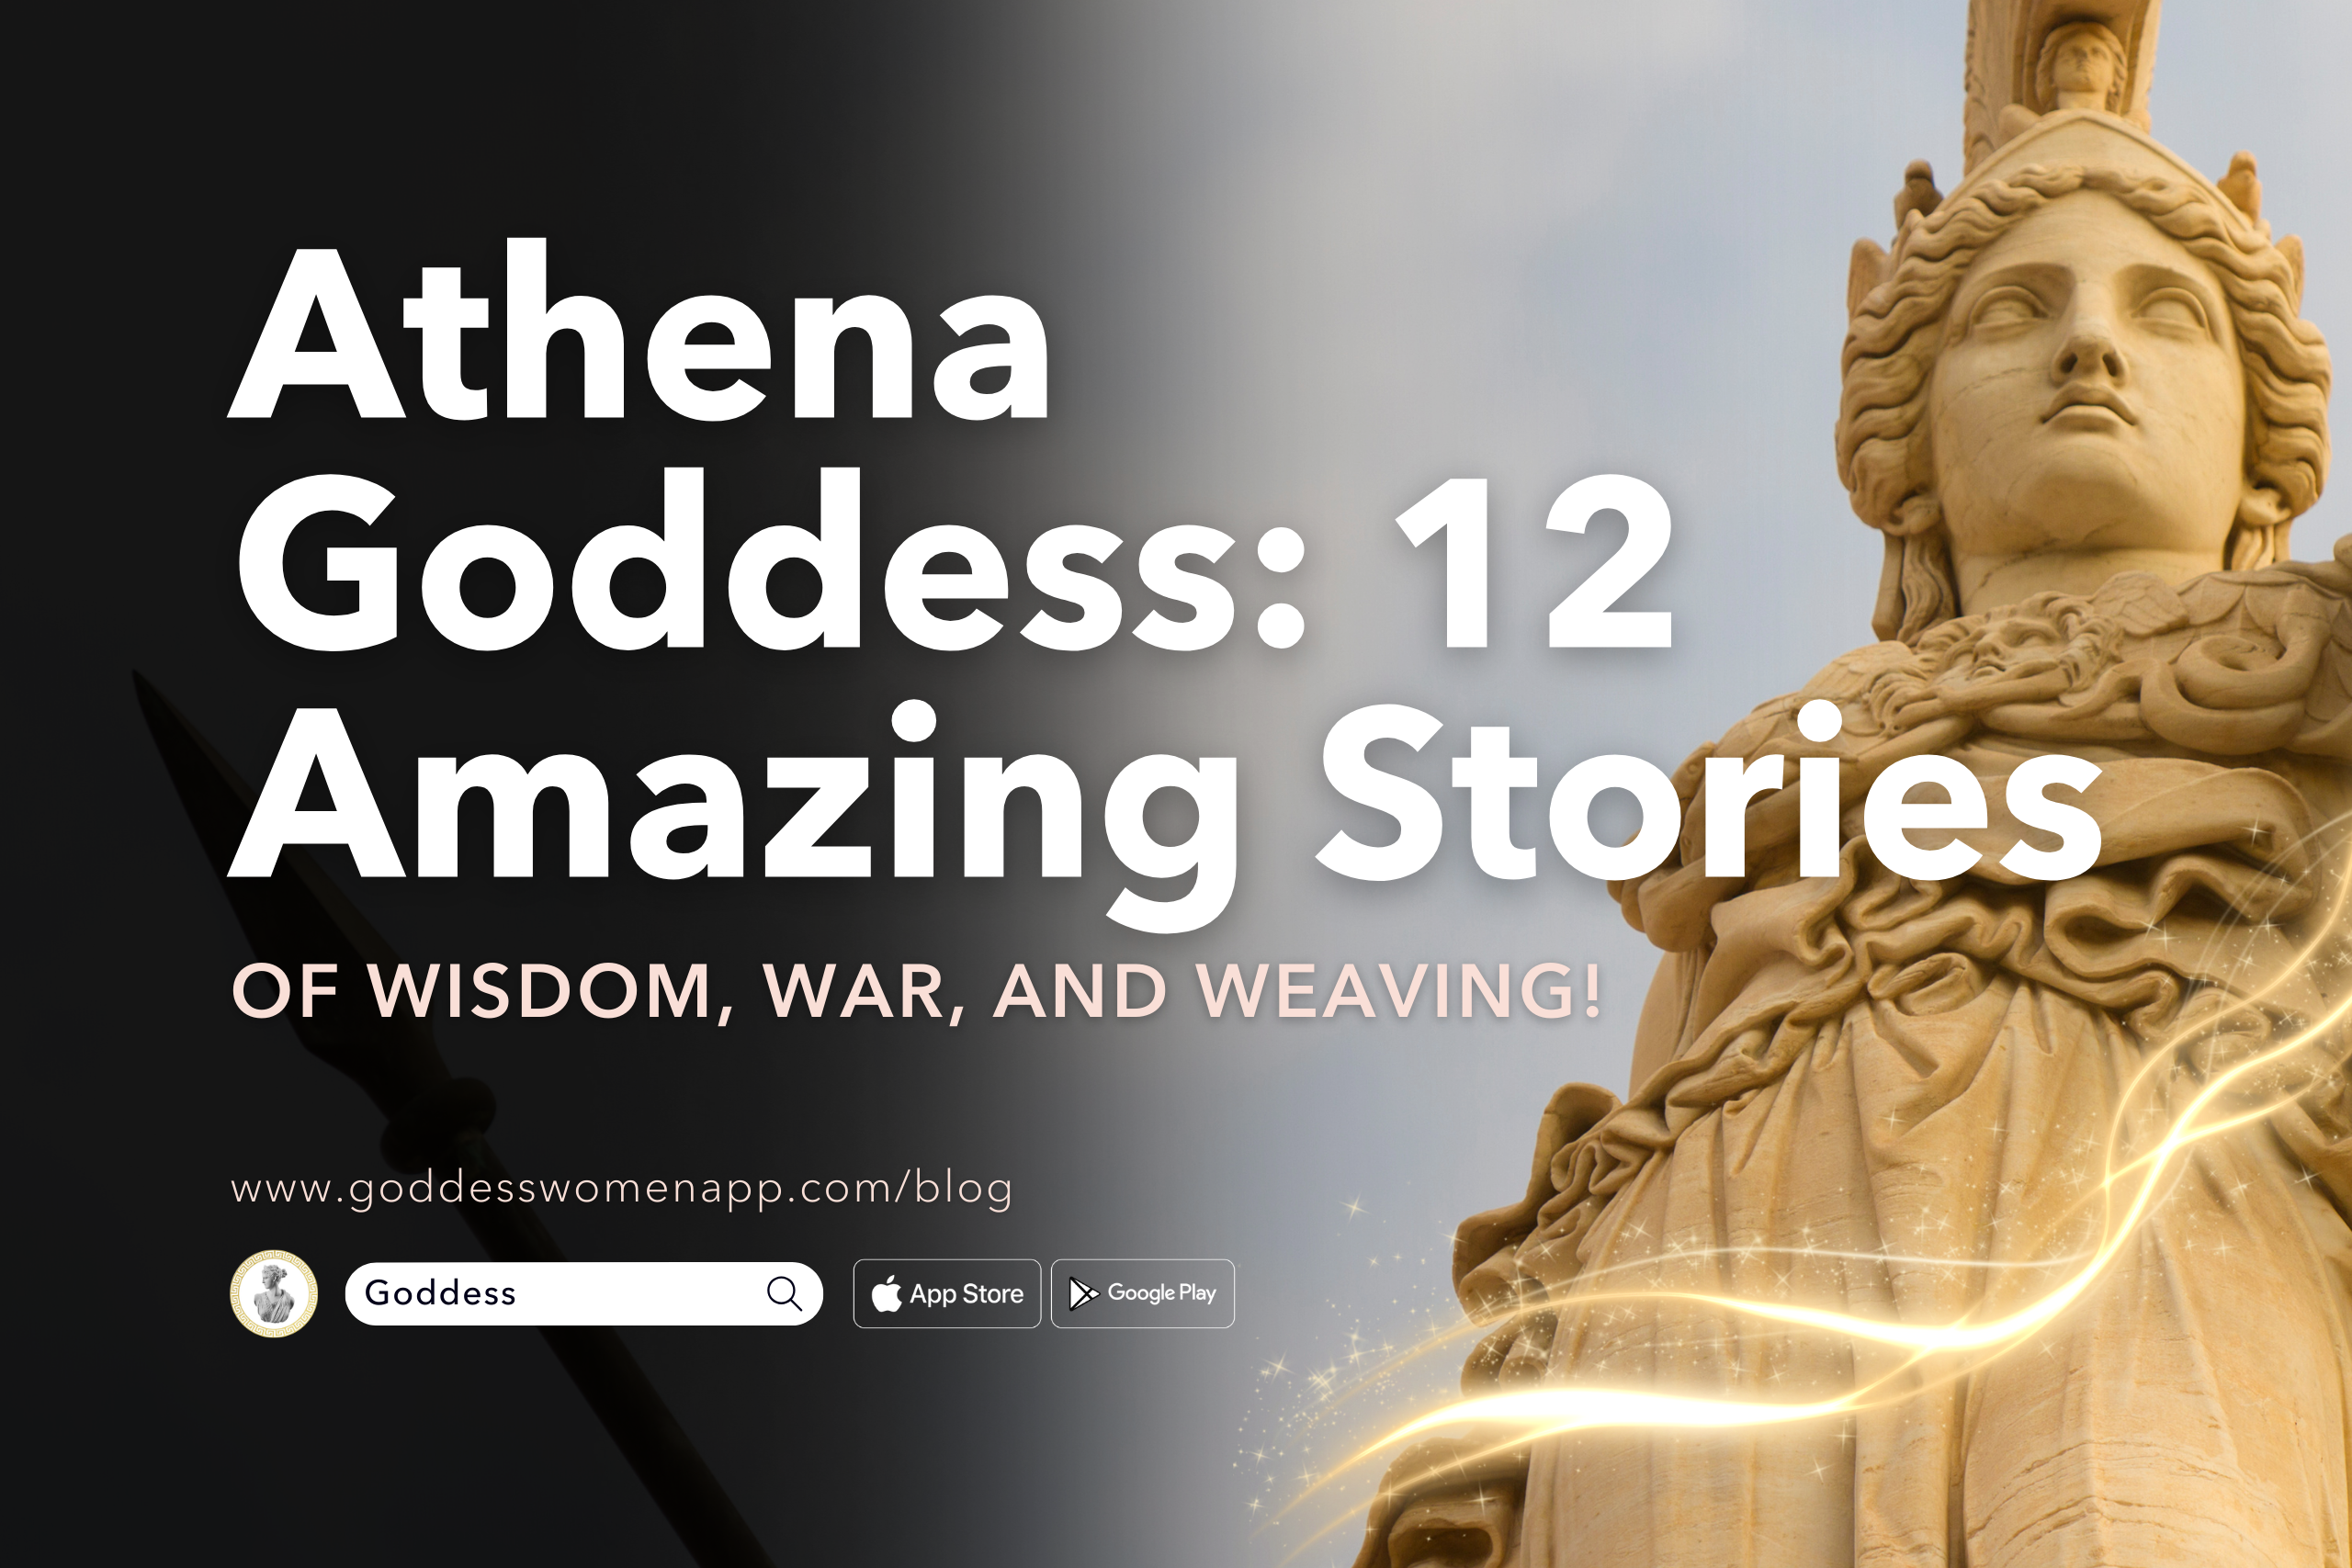 Athena Goddess: 12 Amazing Stories of Wisdom, War, and Weaving!